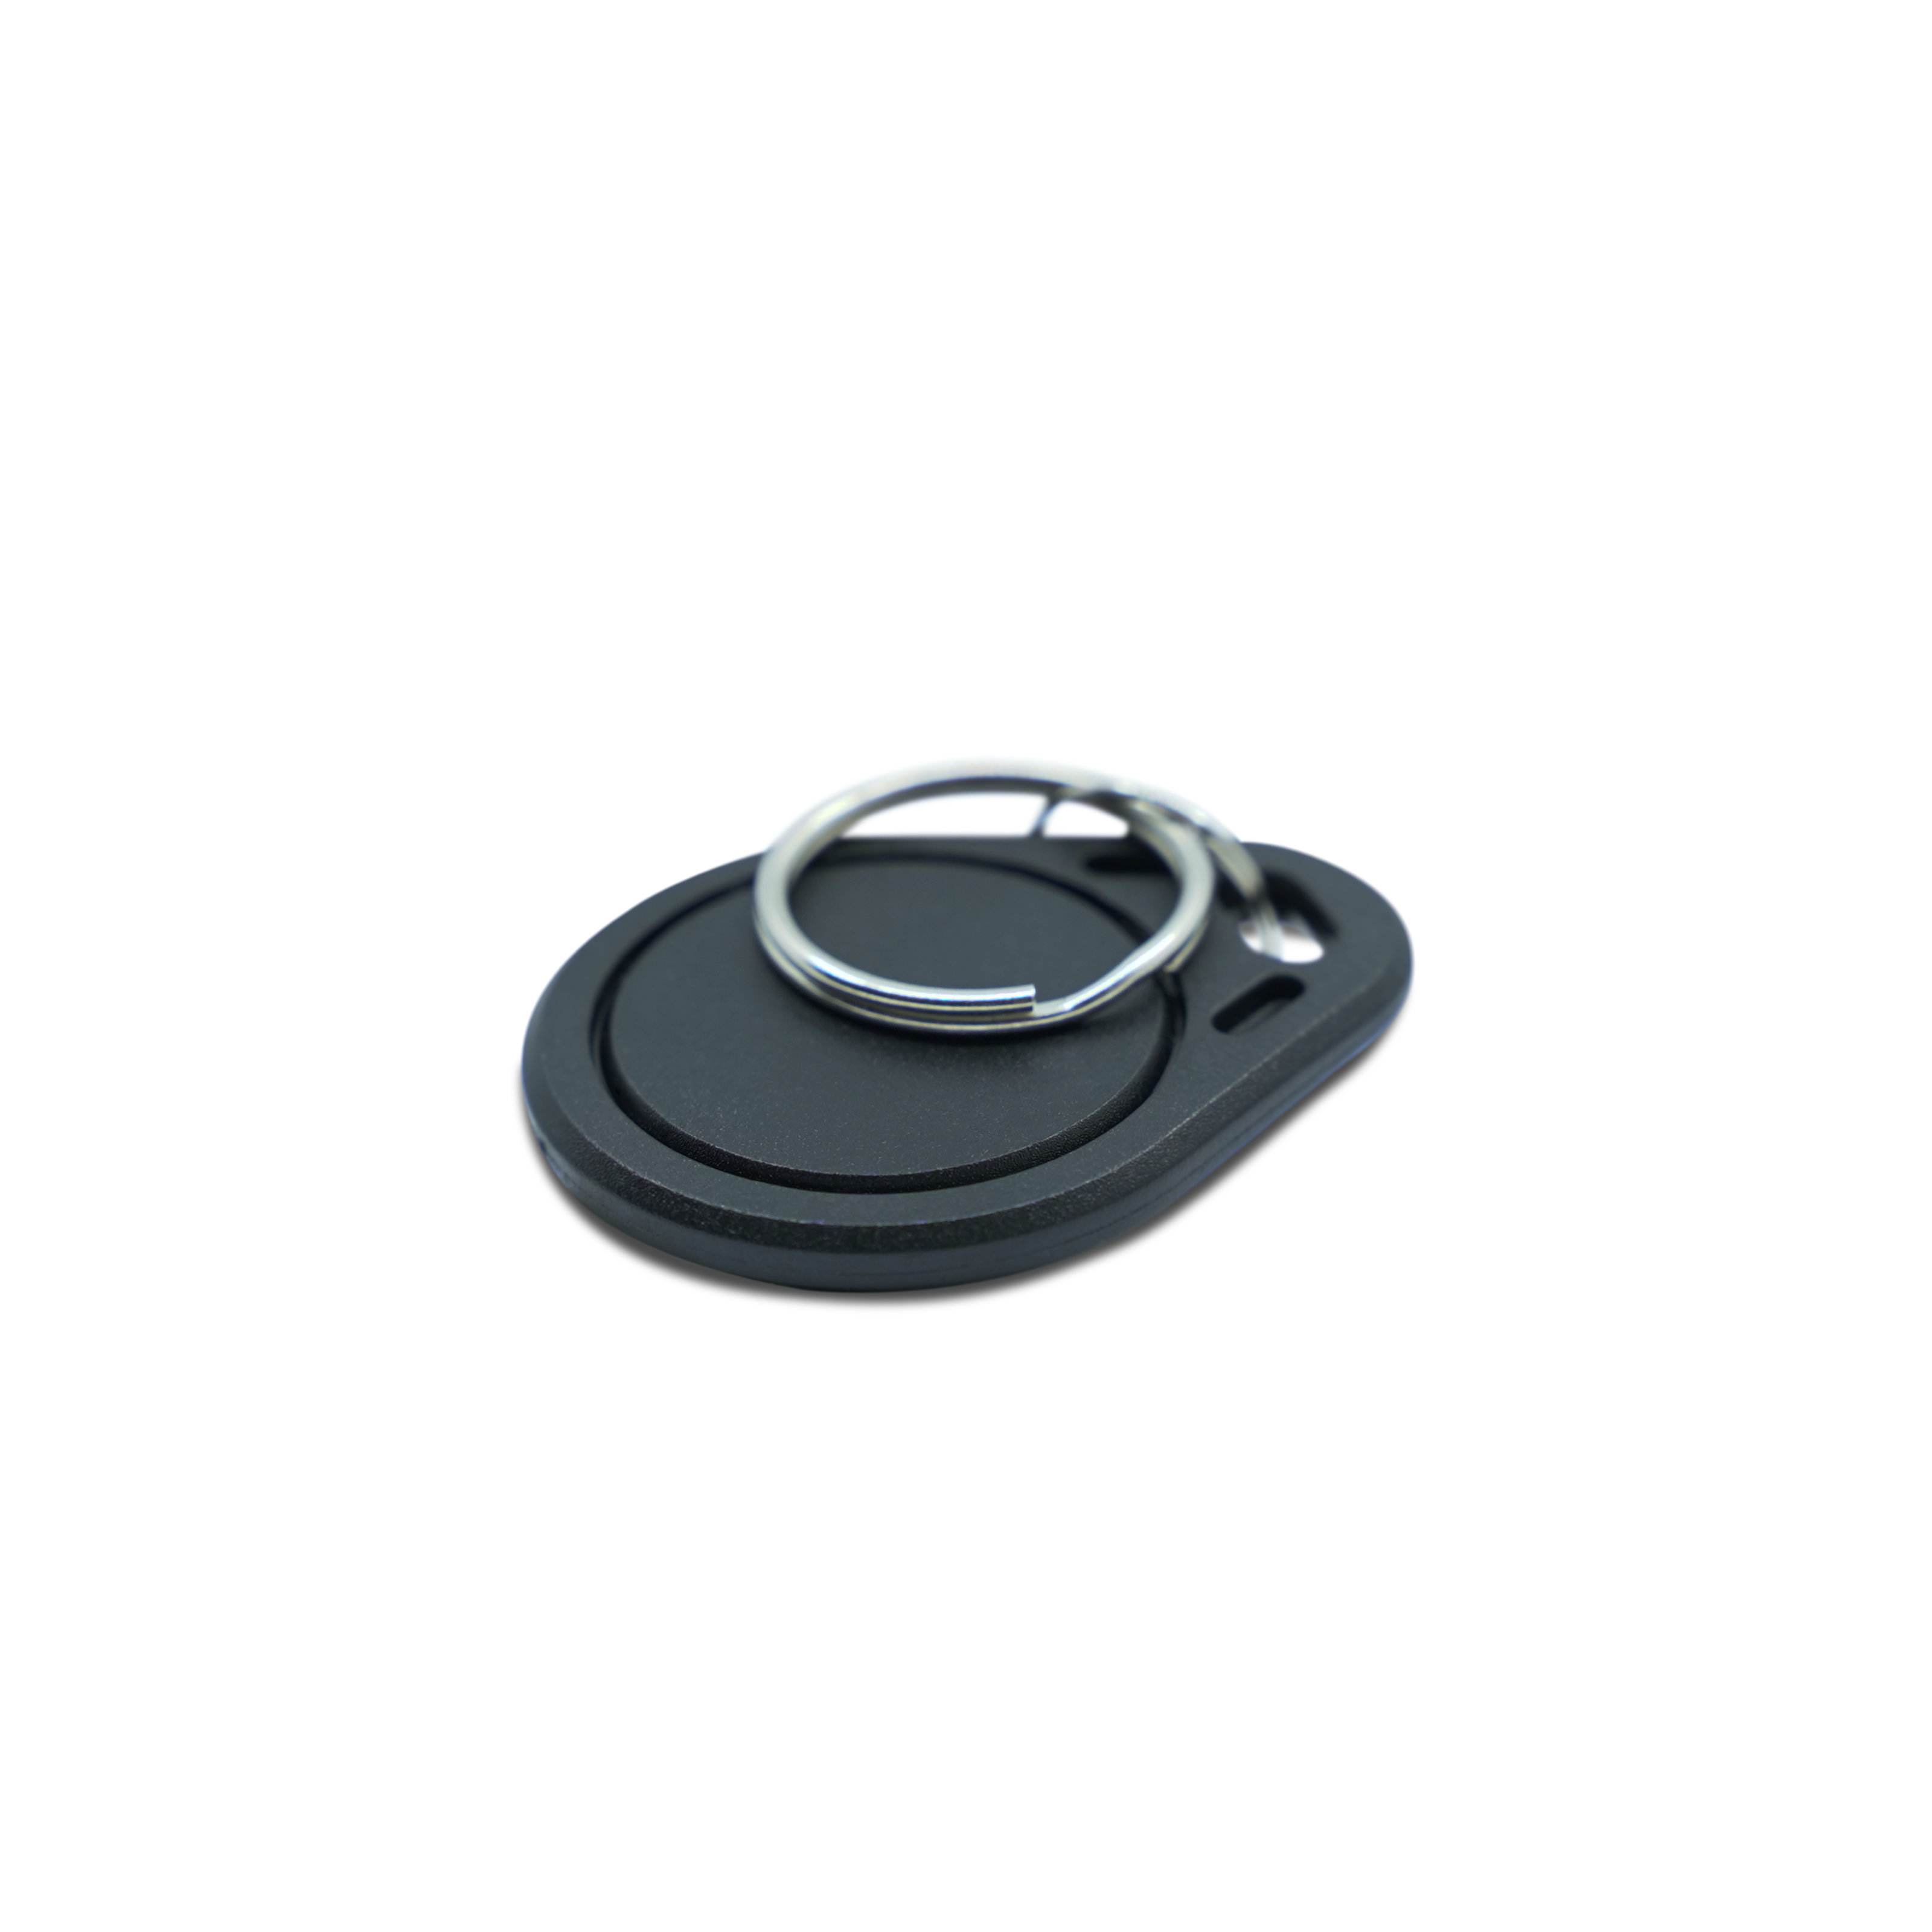 NFC tag ABS - 40 x 32 mm - MIFARE DESFire EV2 4k - 4096 Byte - black